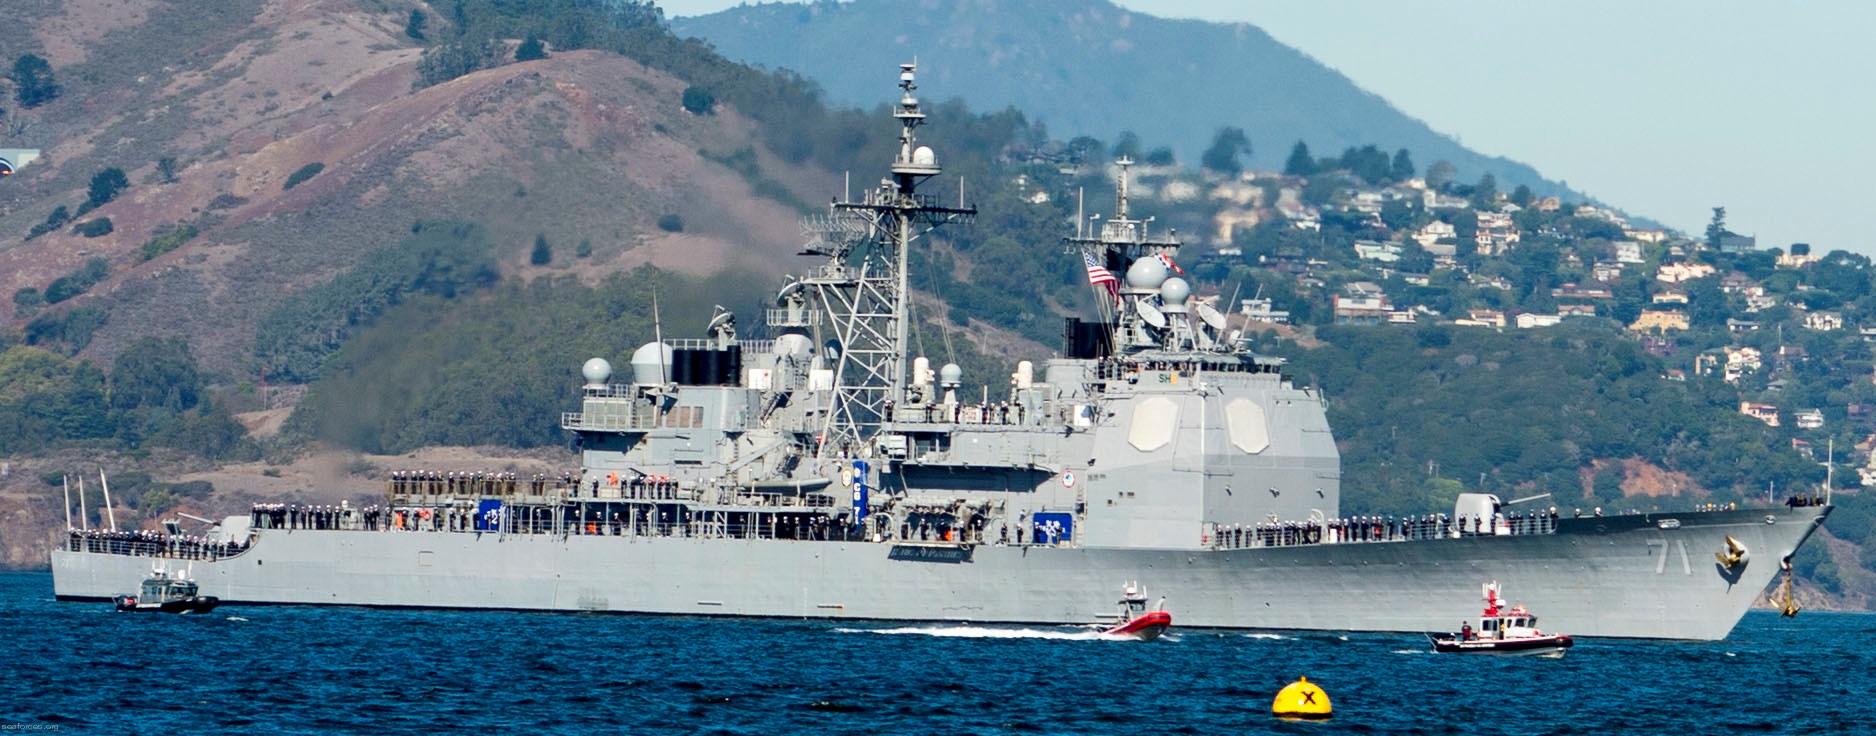 cg-71 uss cape st. george ticonderoga class guided missile cruiser us navy 02 san francisco fleet week 2015